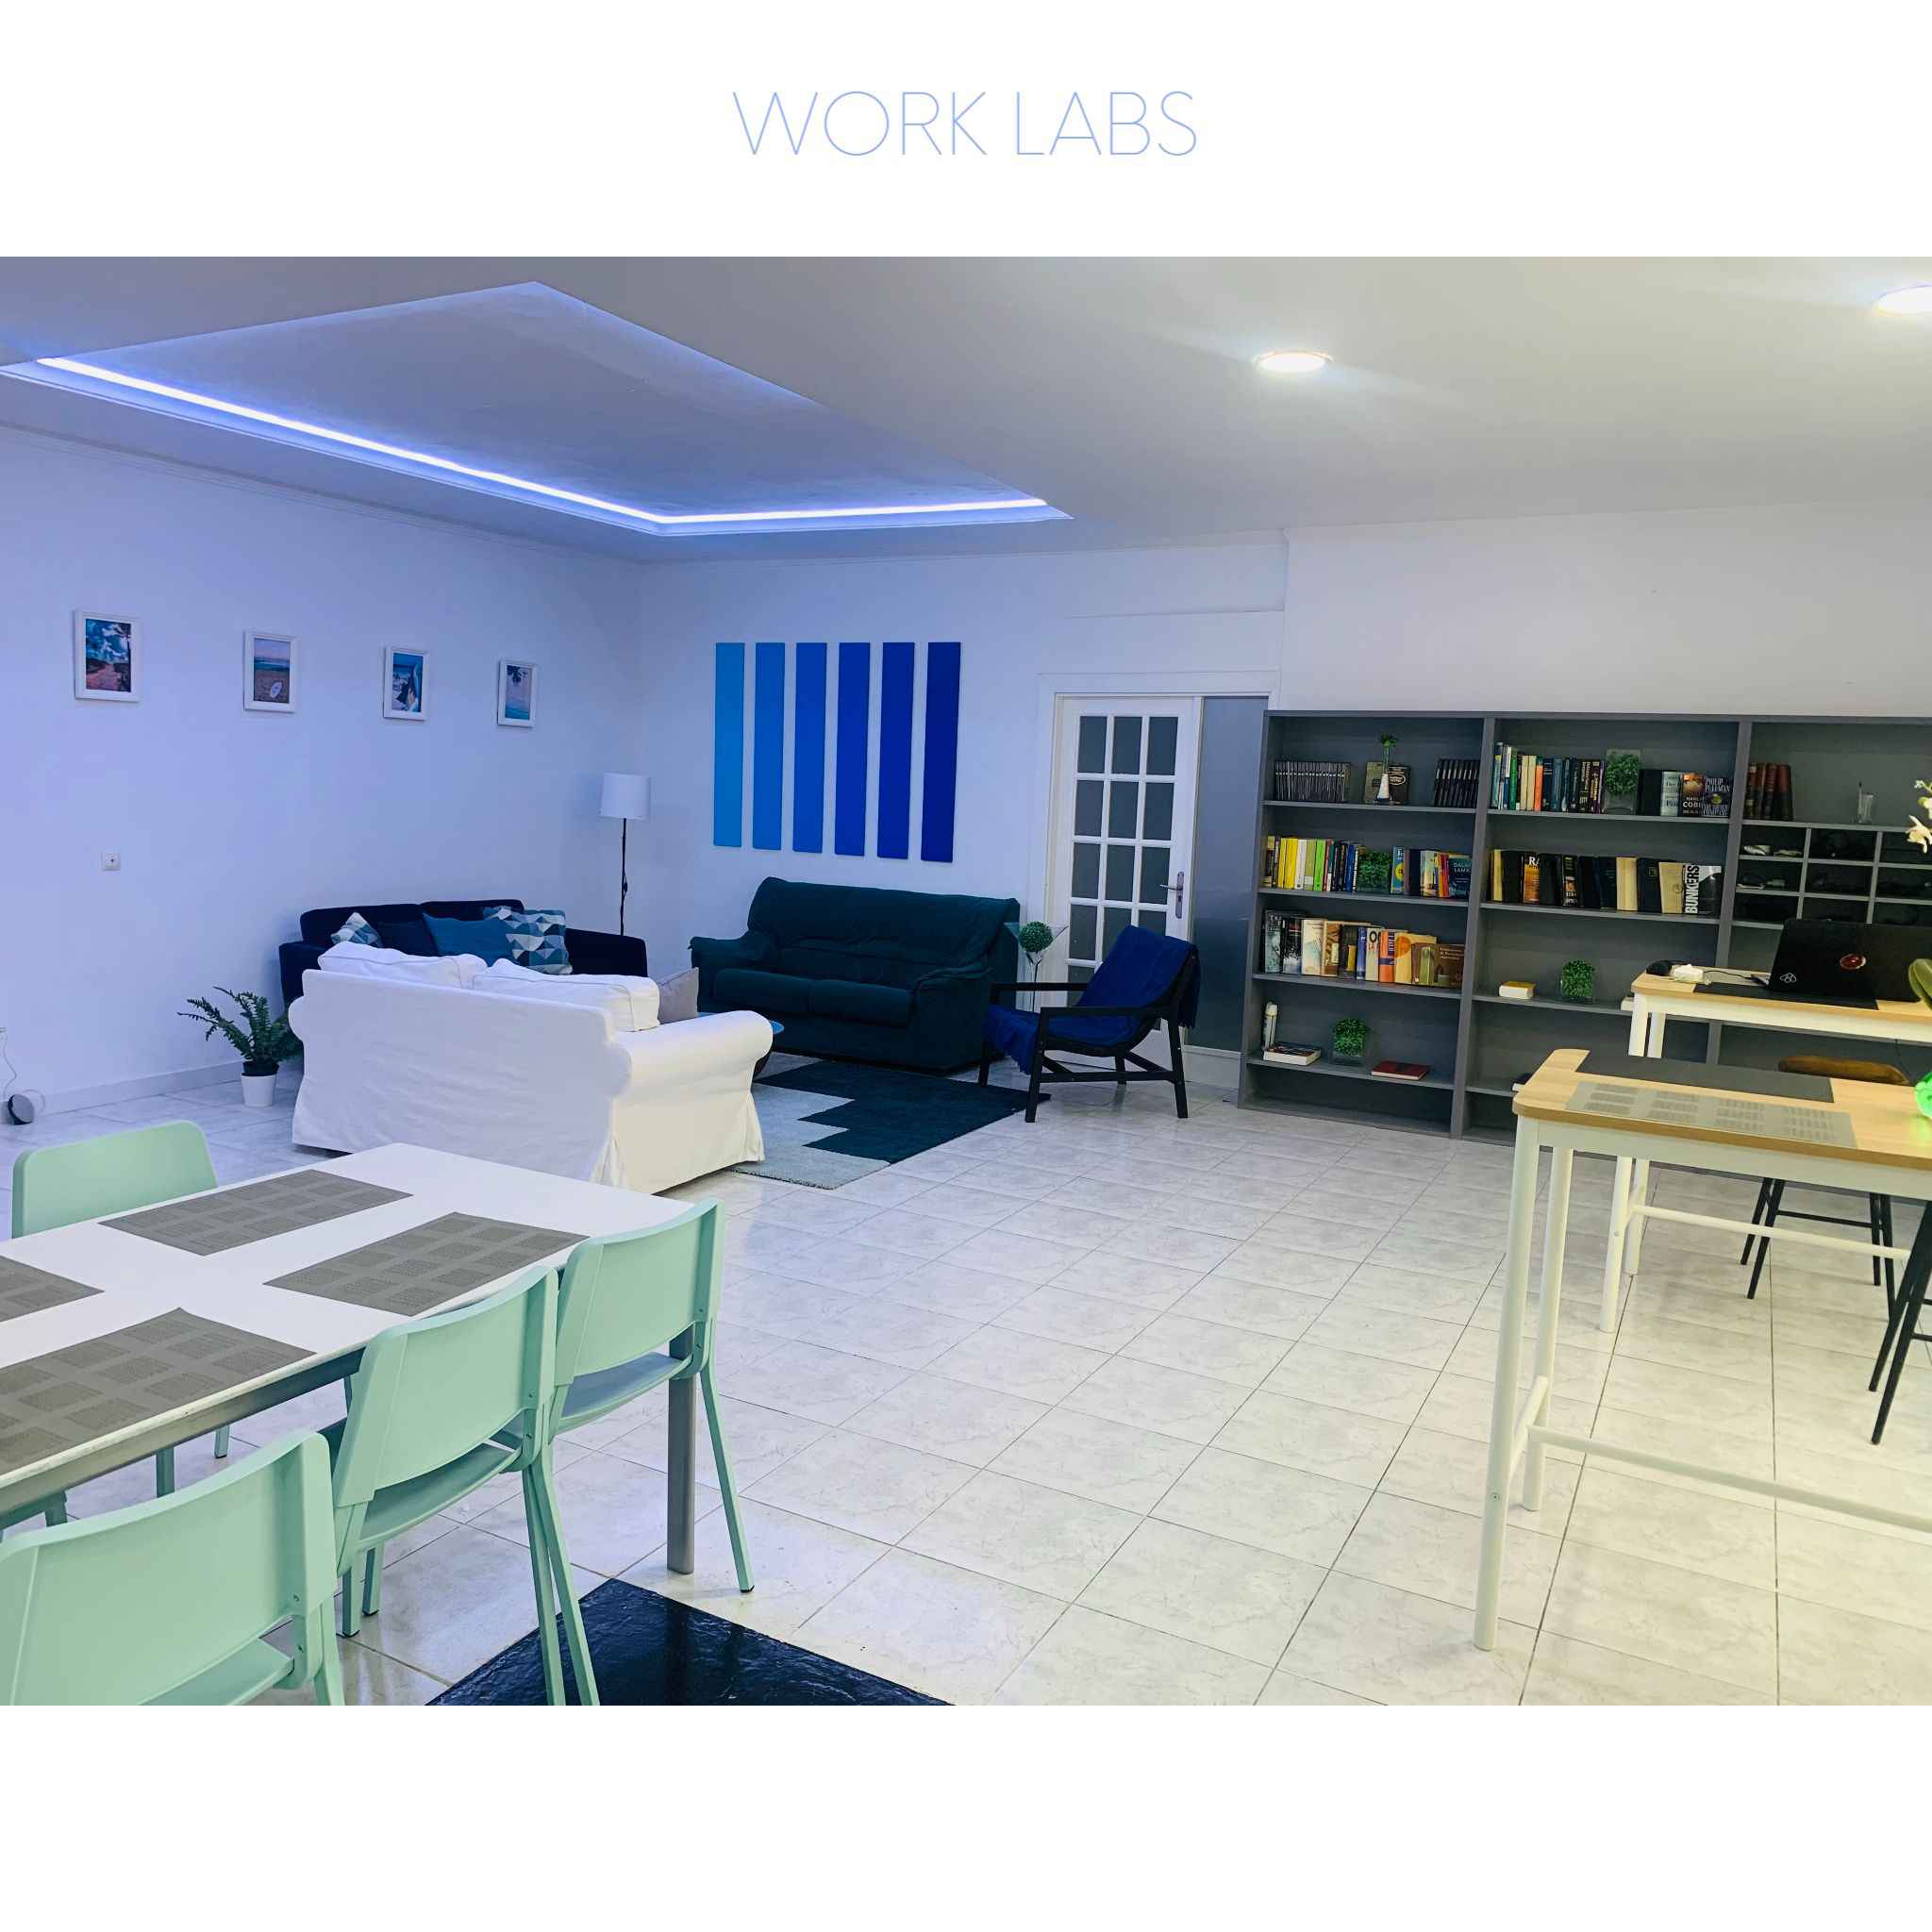 Work-Labs image 4